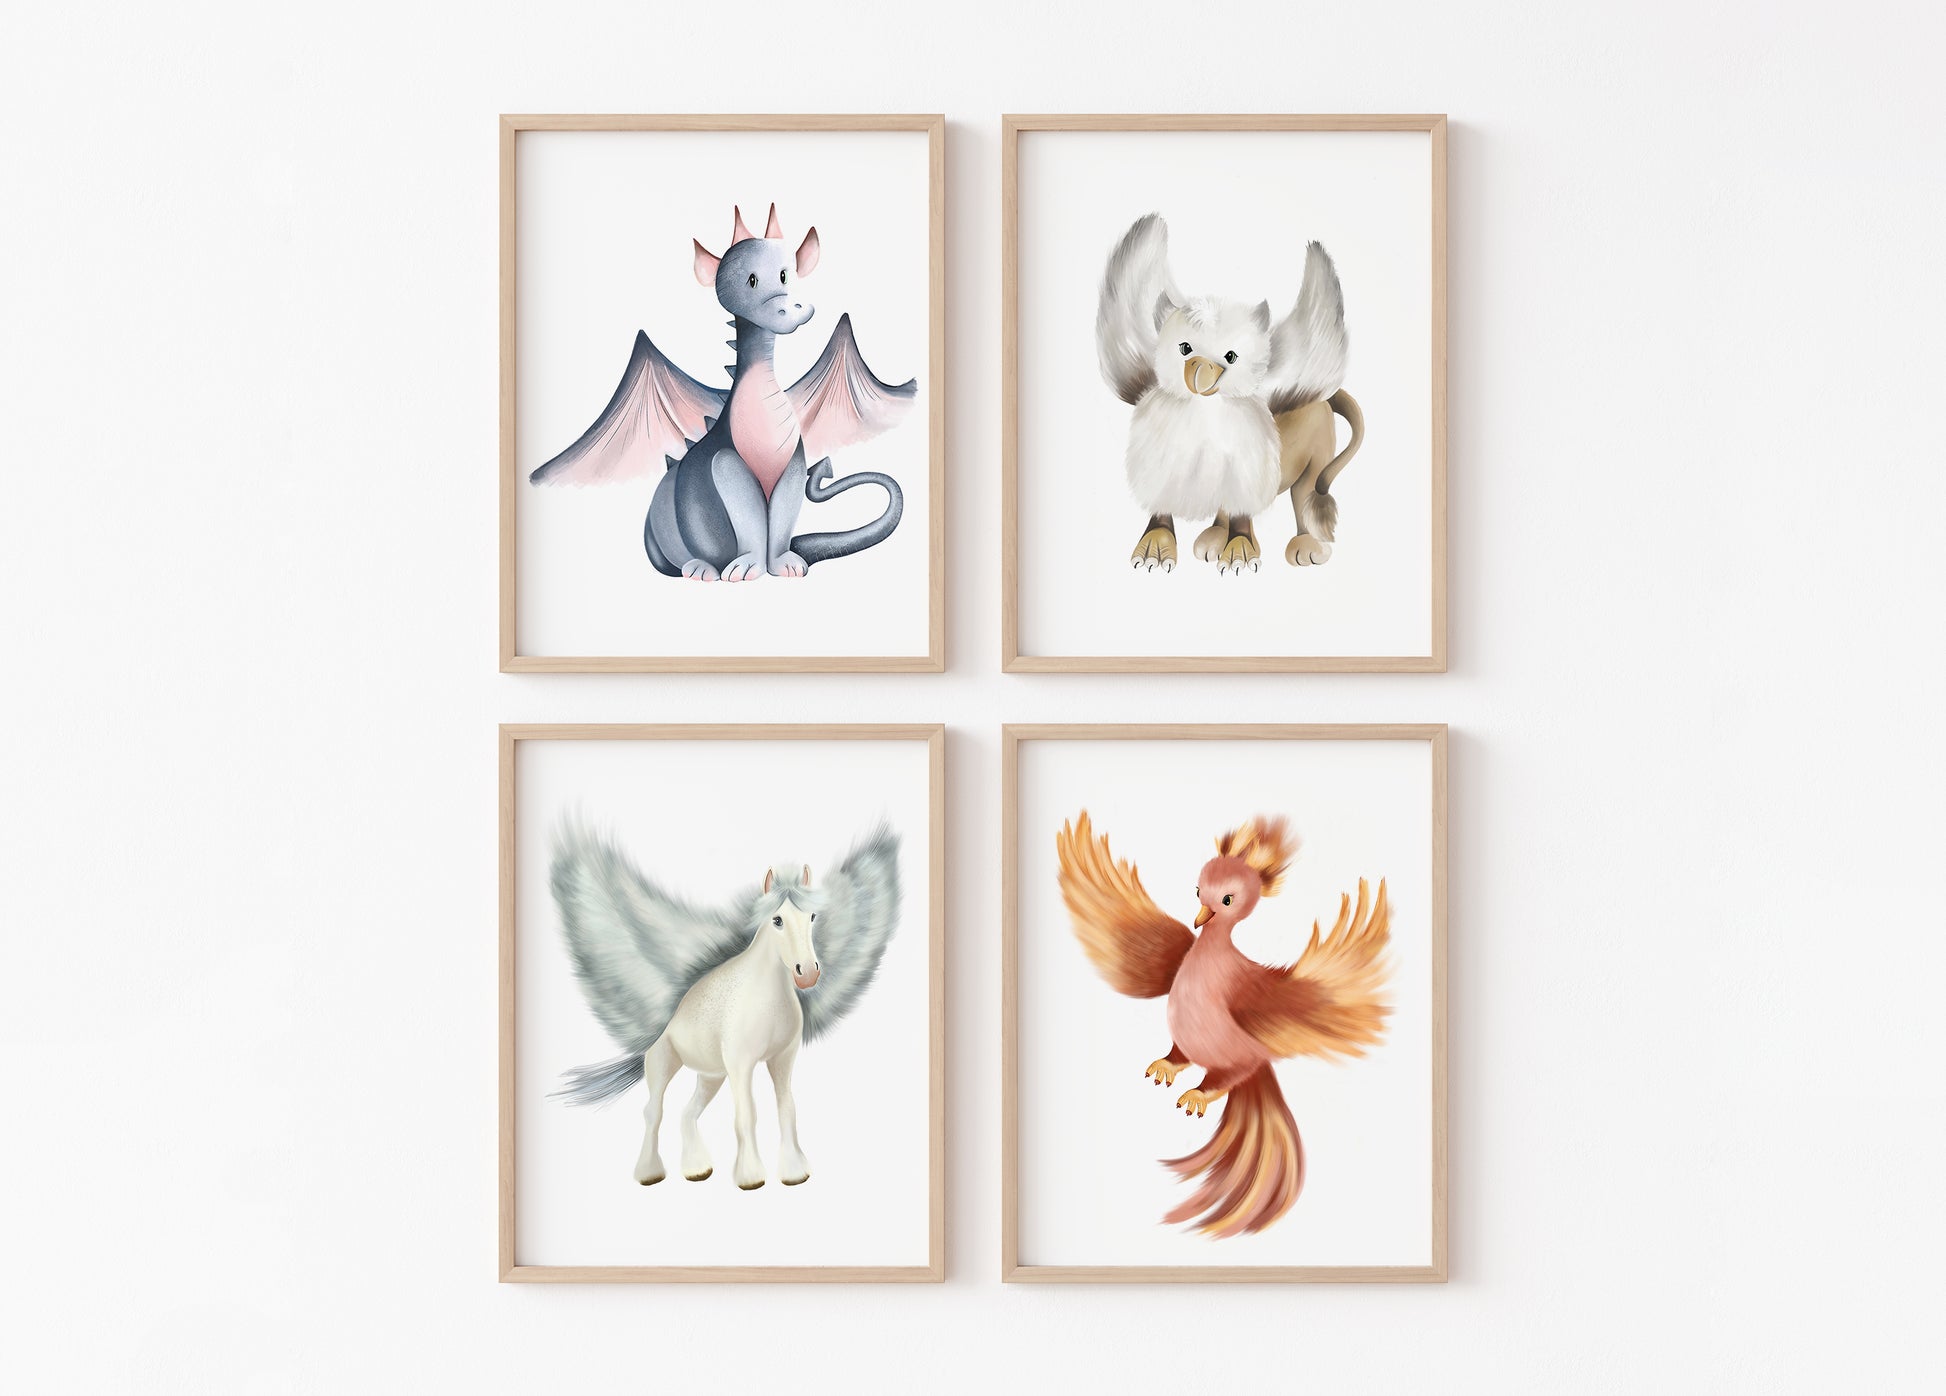 Mythological Animal Prints - Set of 4 - Studio Q - Art by Nicky Quartermaine Scott